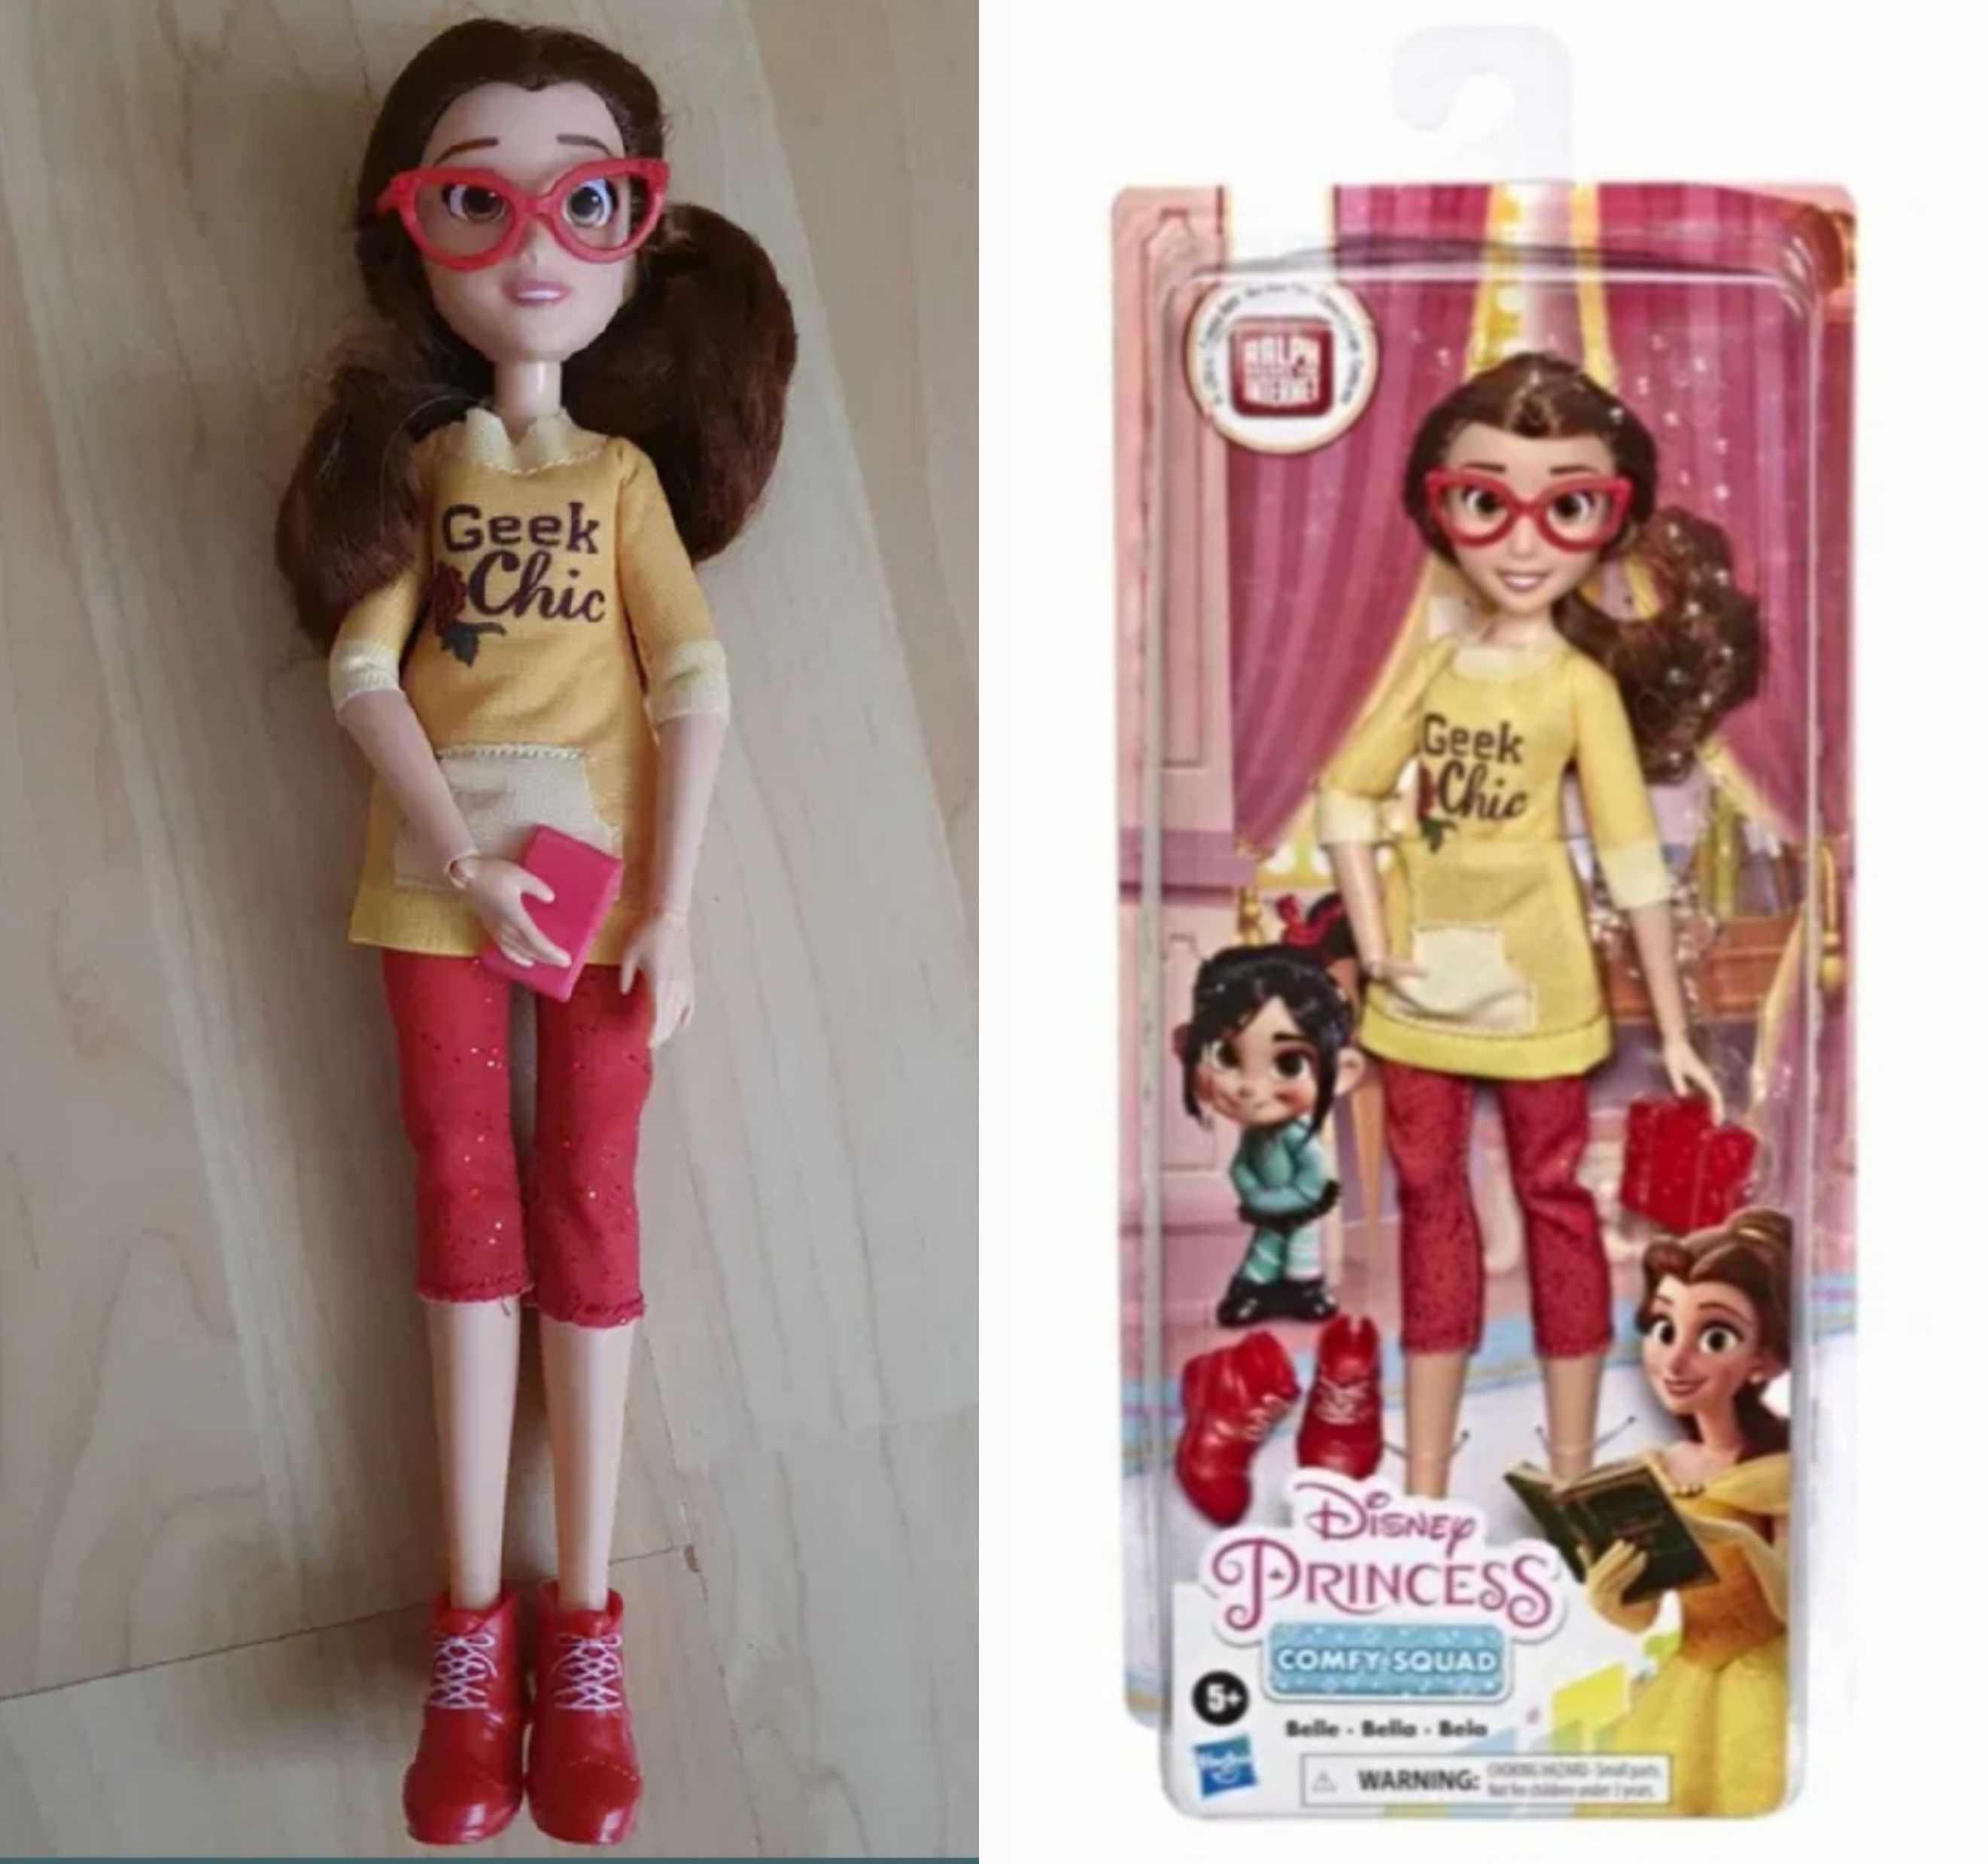 Barbie păpuși Dreamtopia rochii curcubeu /Fashionista/Belle+cadou